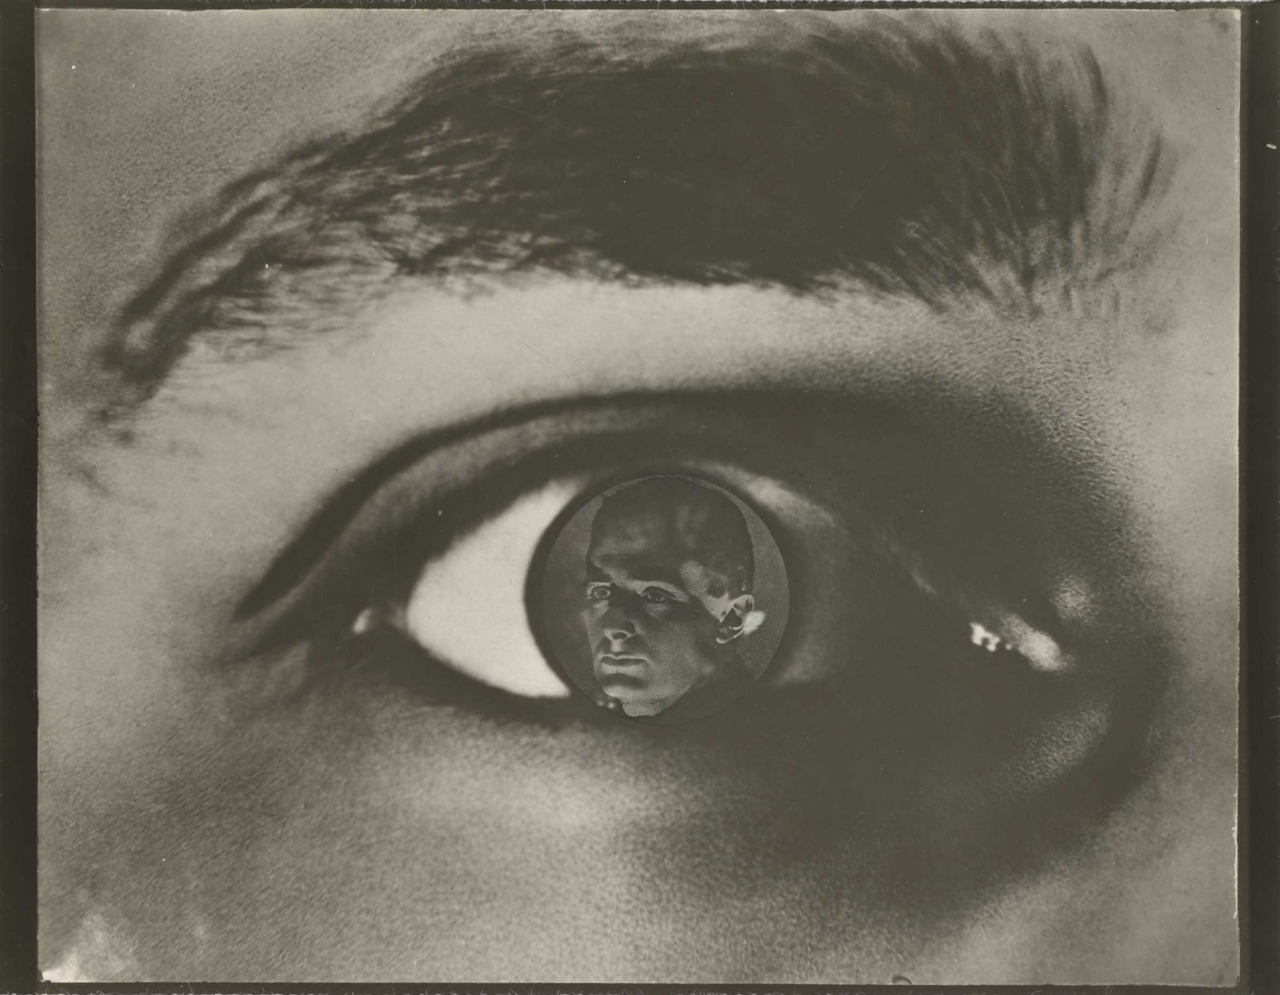 Dziga Vertov-Kino Auge by El Lissitzky - 1929 - 15.2 x 11.8 cm Museum of Fine Arts